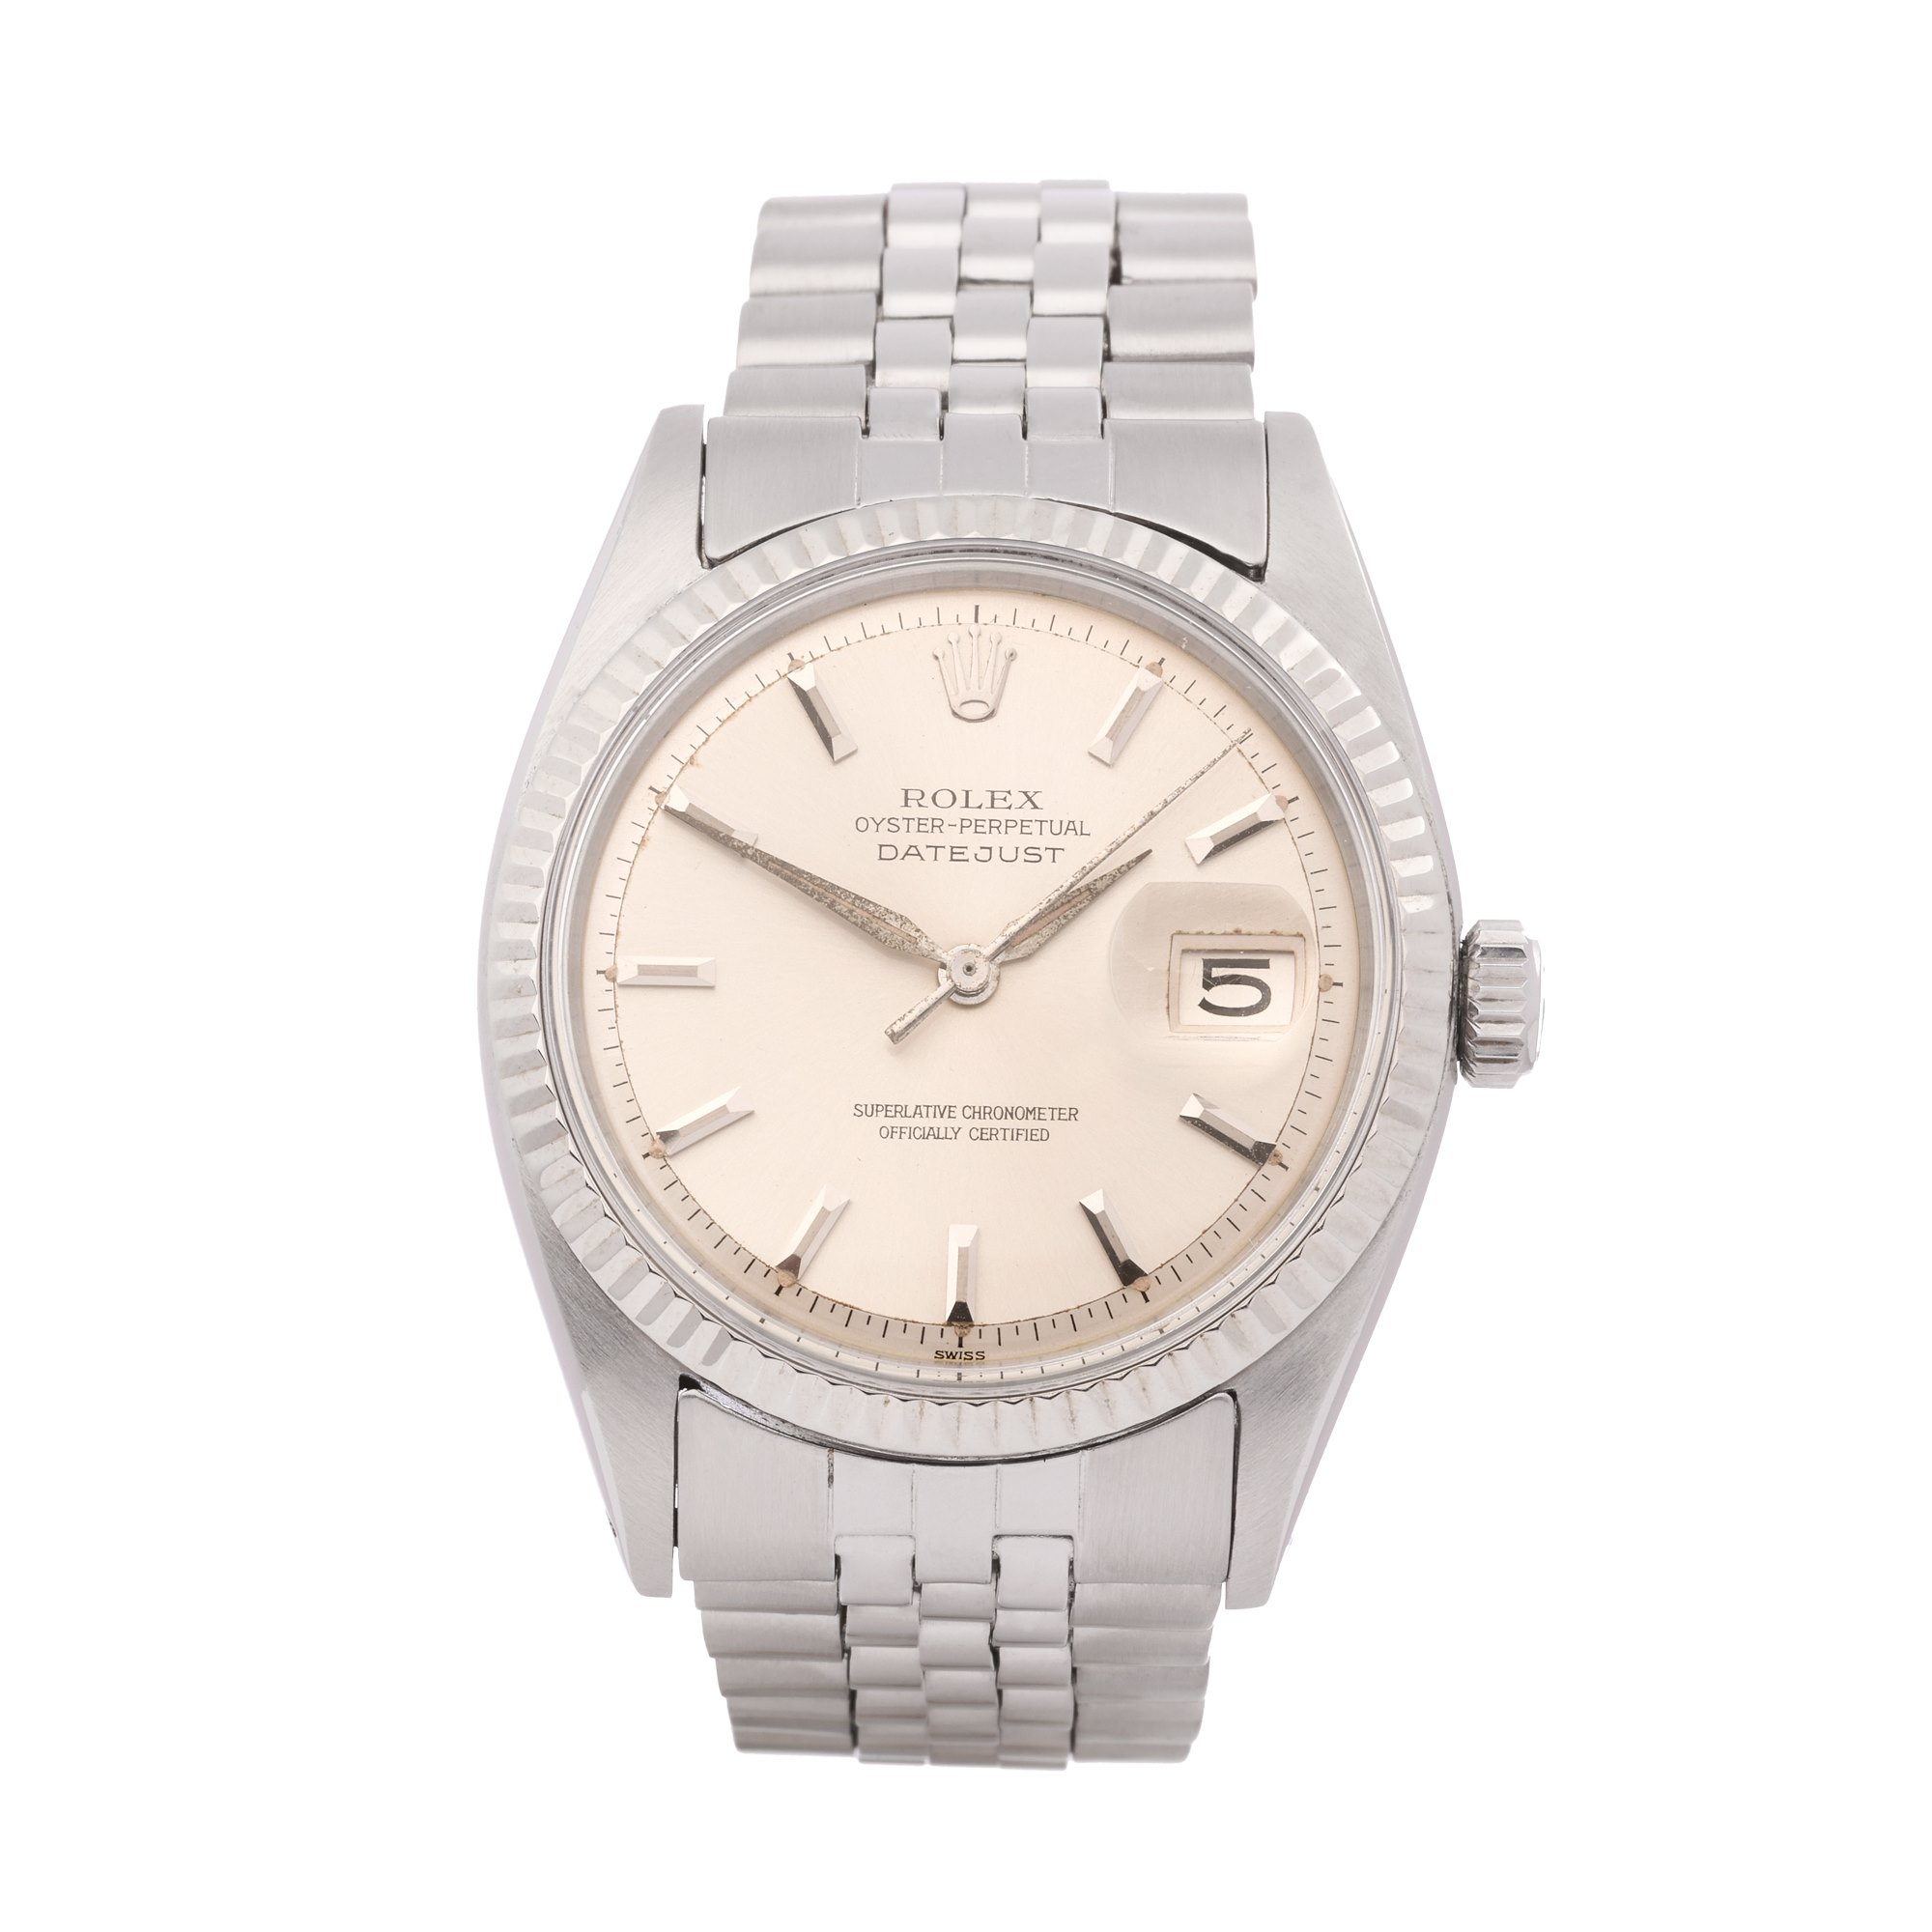 Rolex Datejust 36 Sword Hands 18K White Gold & Stainless Steel Watch 1601